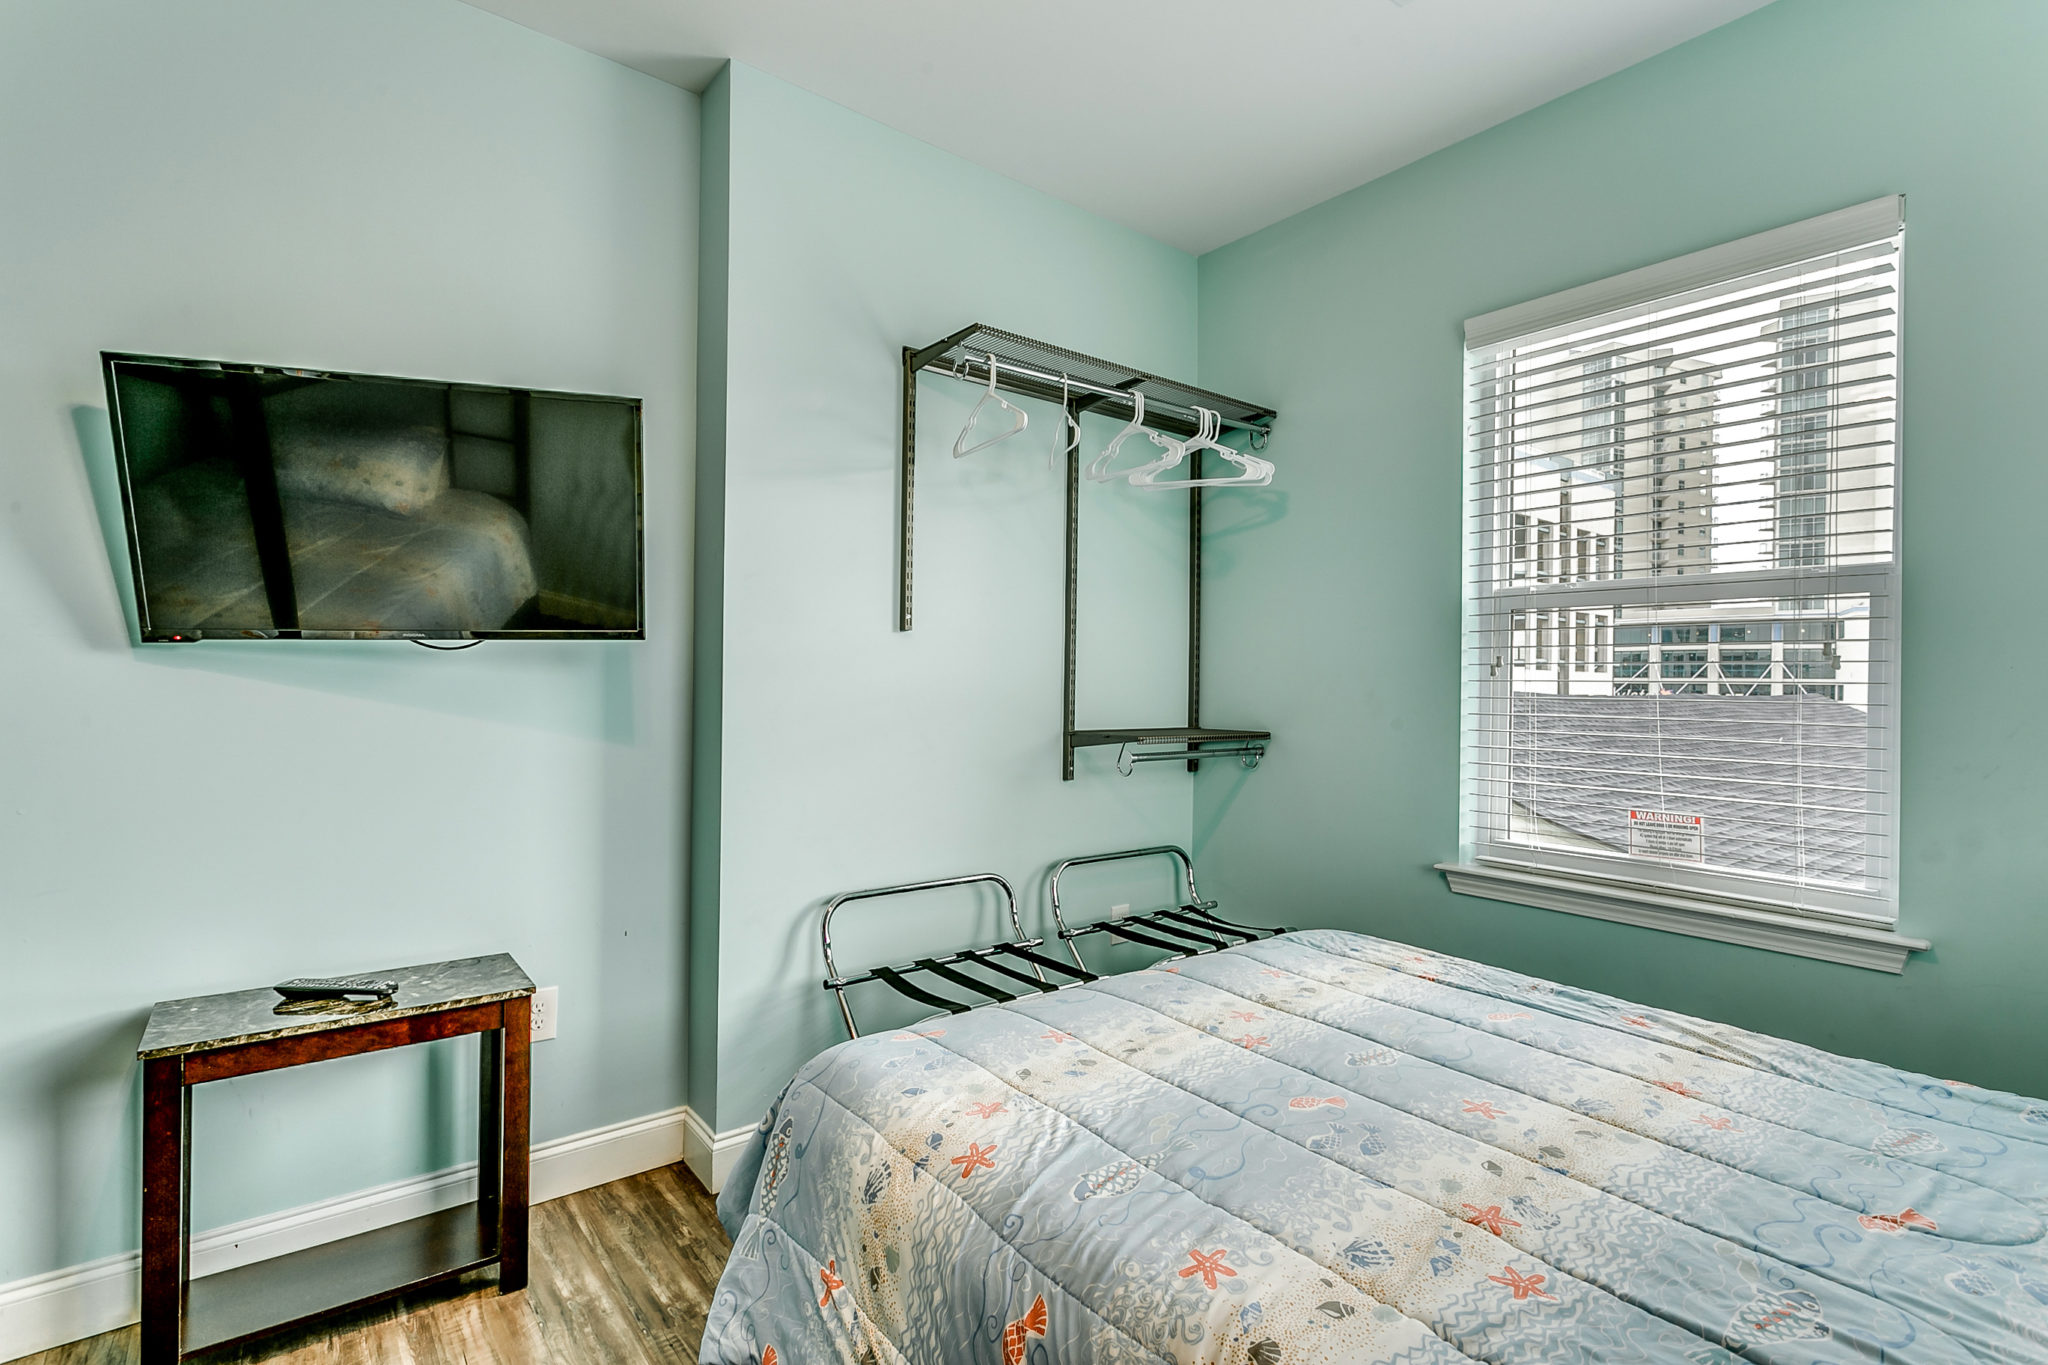 204 54th Ave - Unit B bedroom.